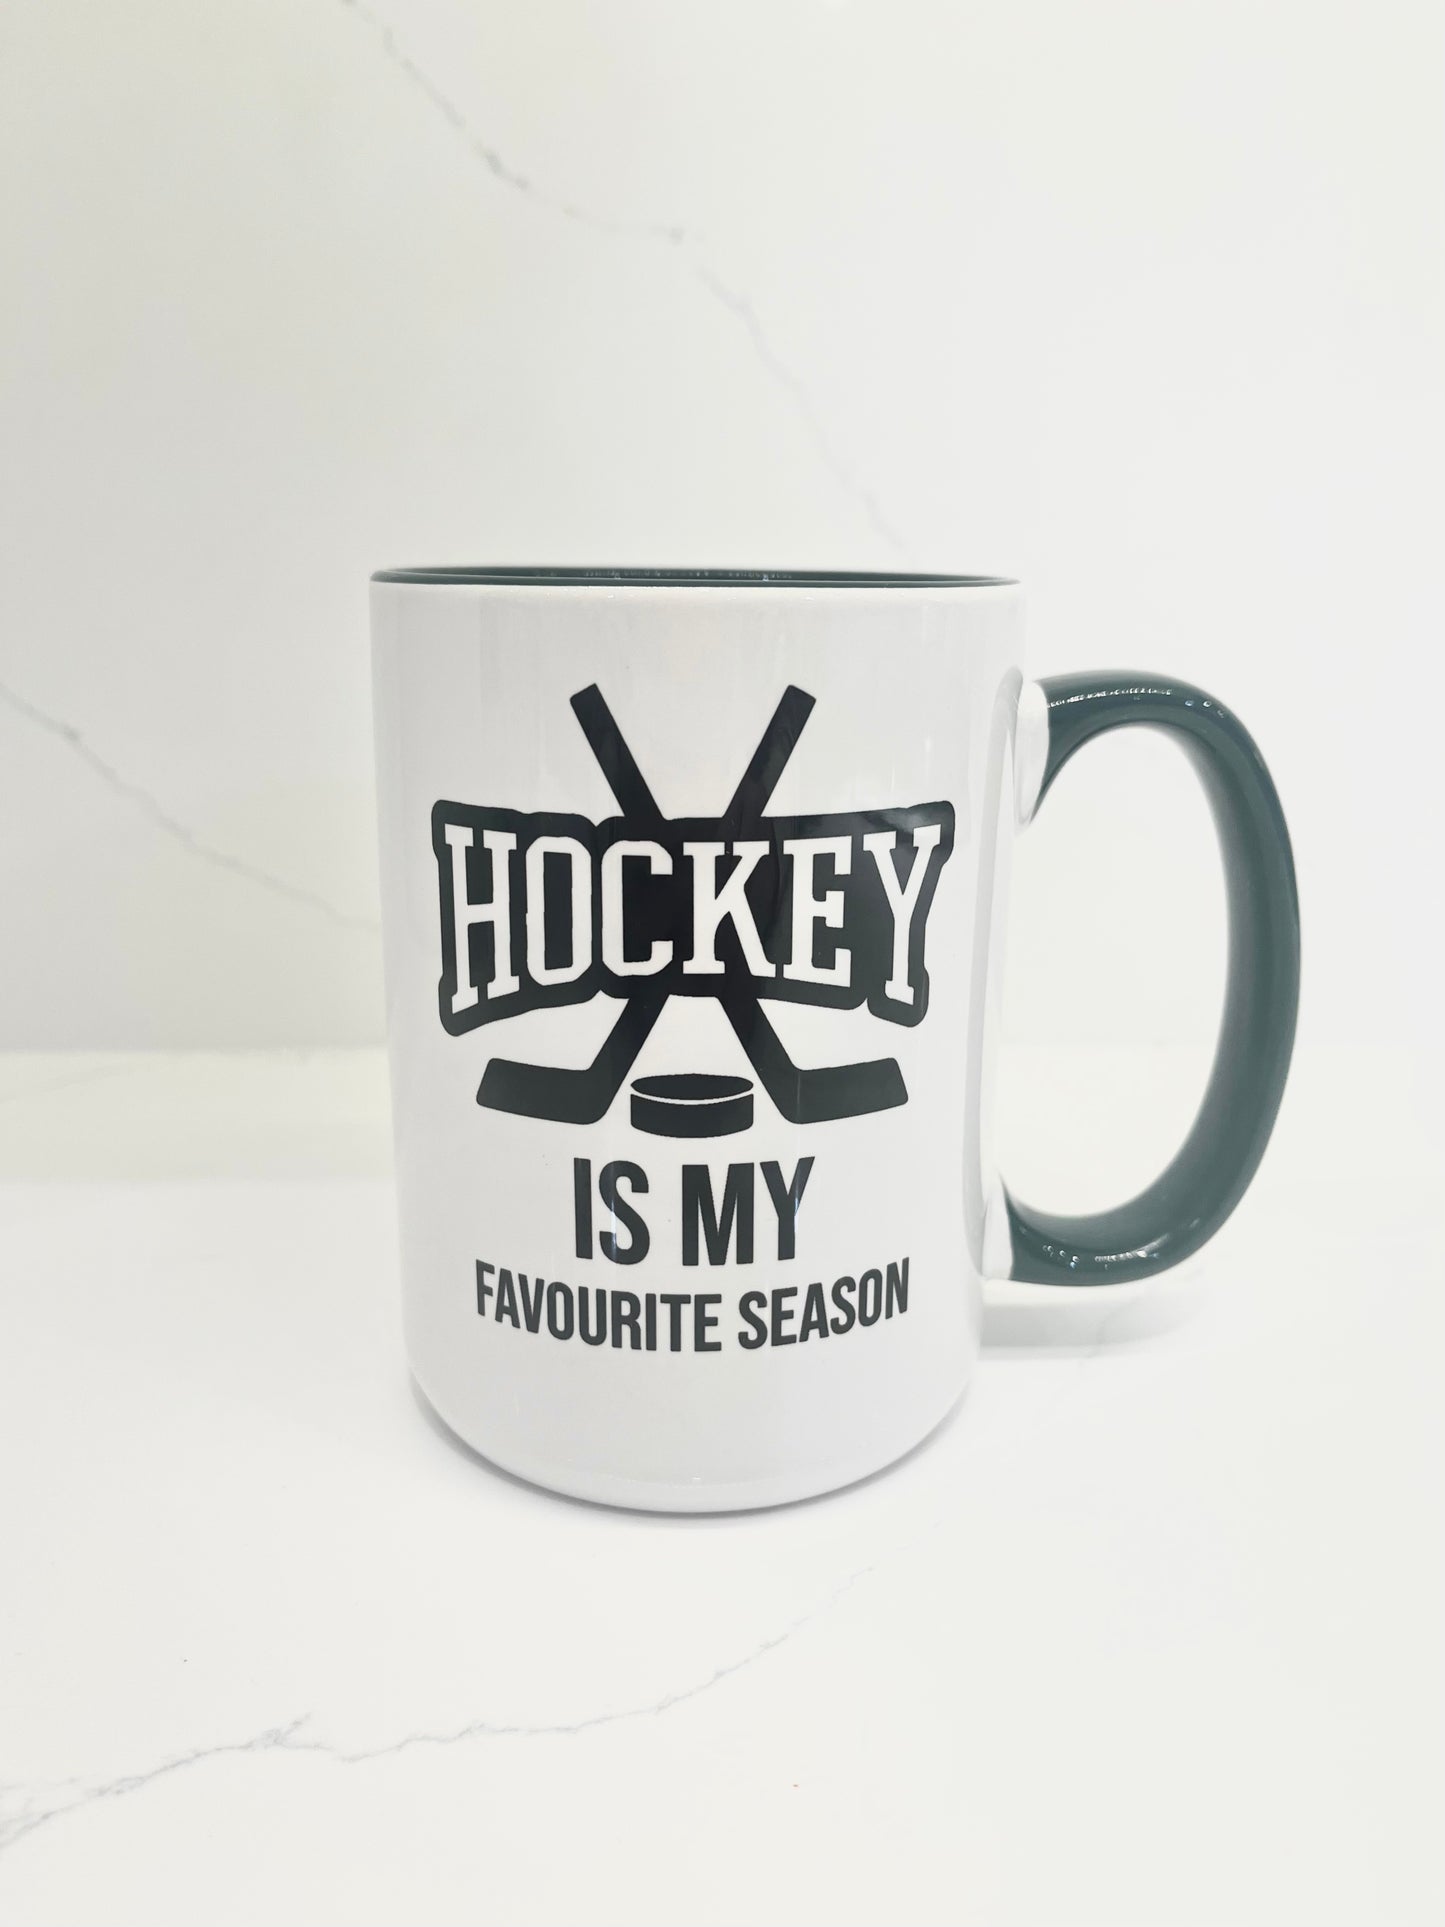 Hockey is my Favourite Season